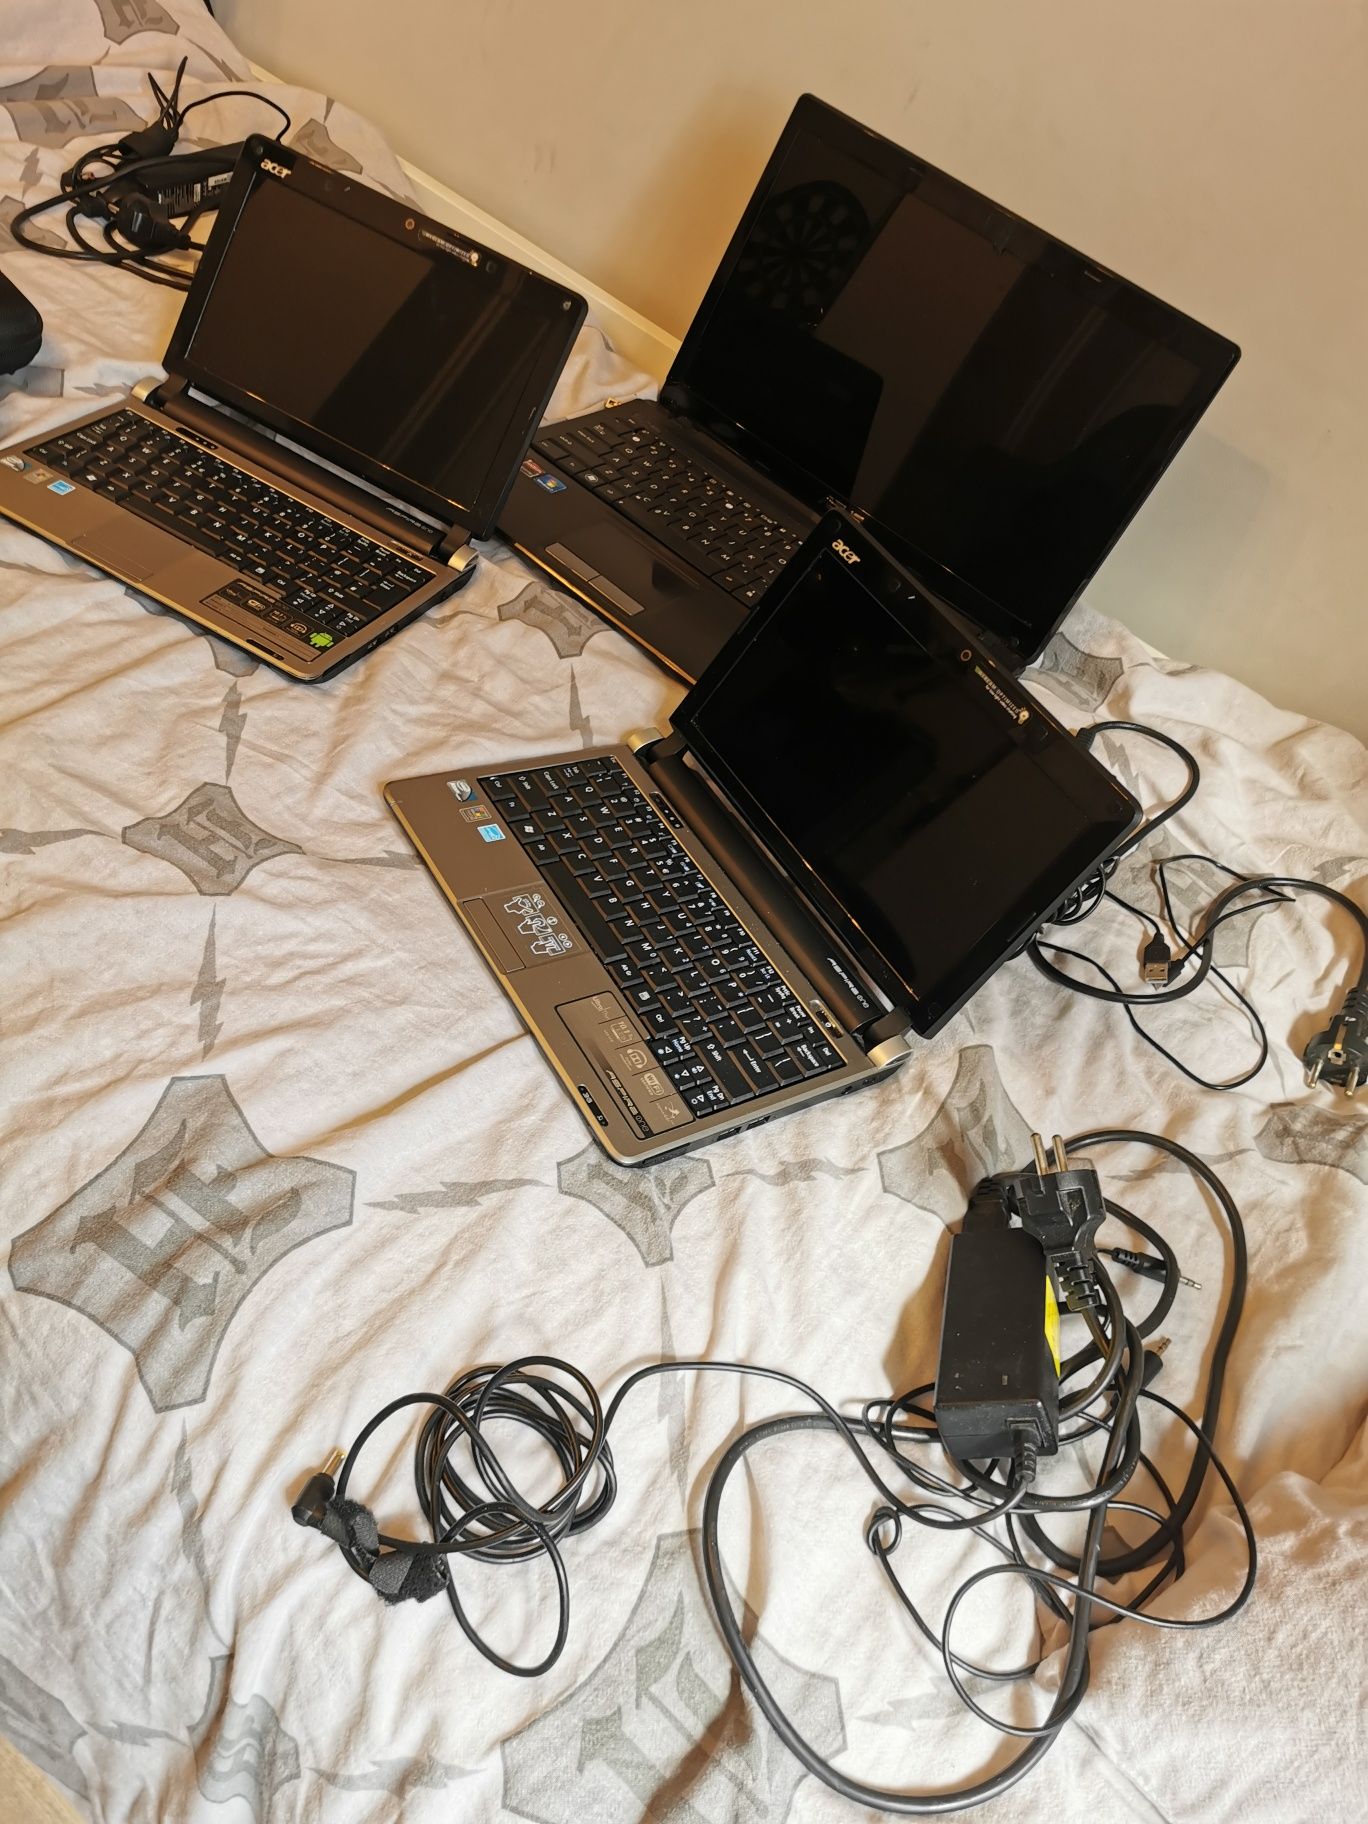 Laptop Acer ASPIRE ONE KAV6, Asus 
Procesor Intel Atom N270 1.6 GHz